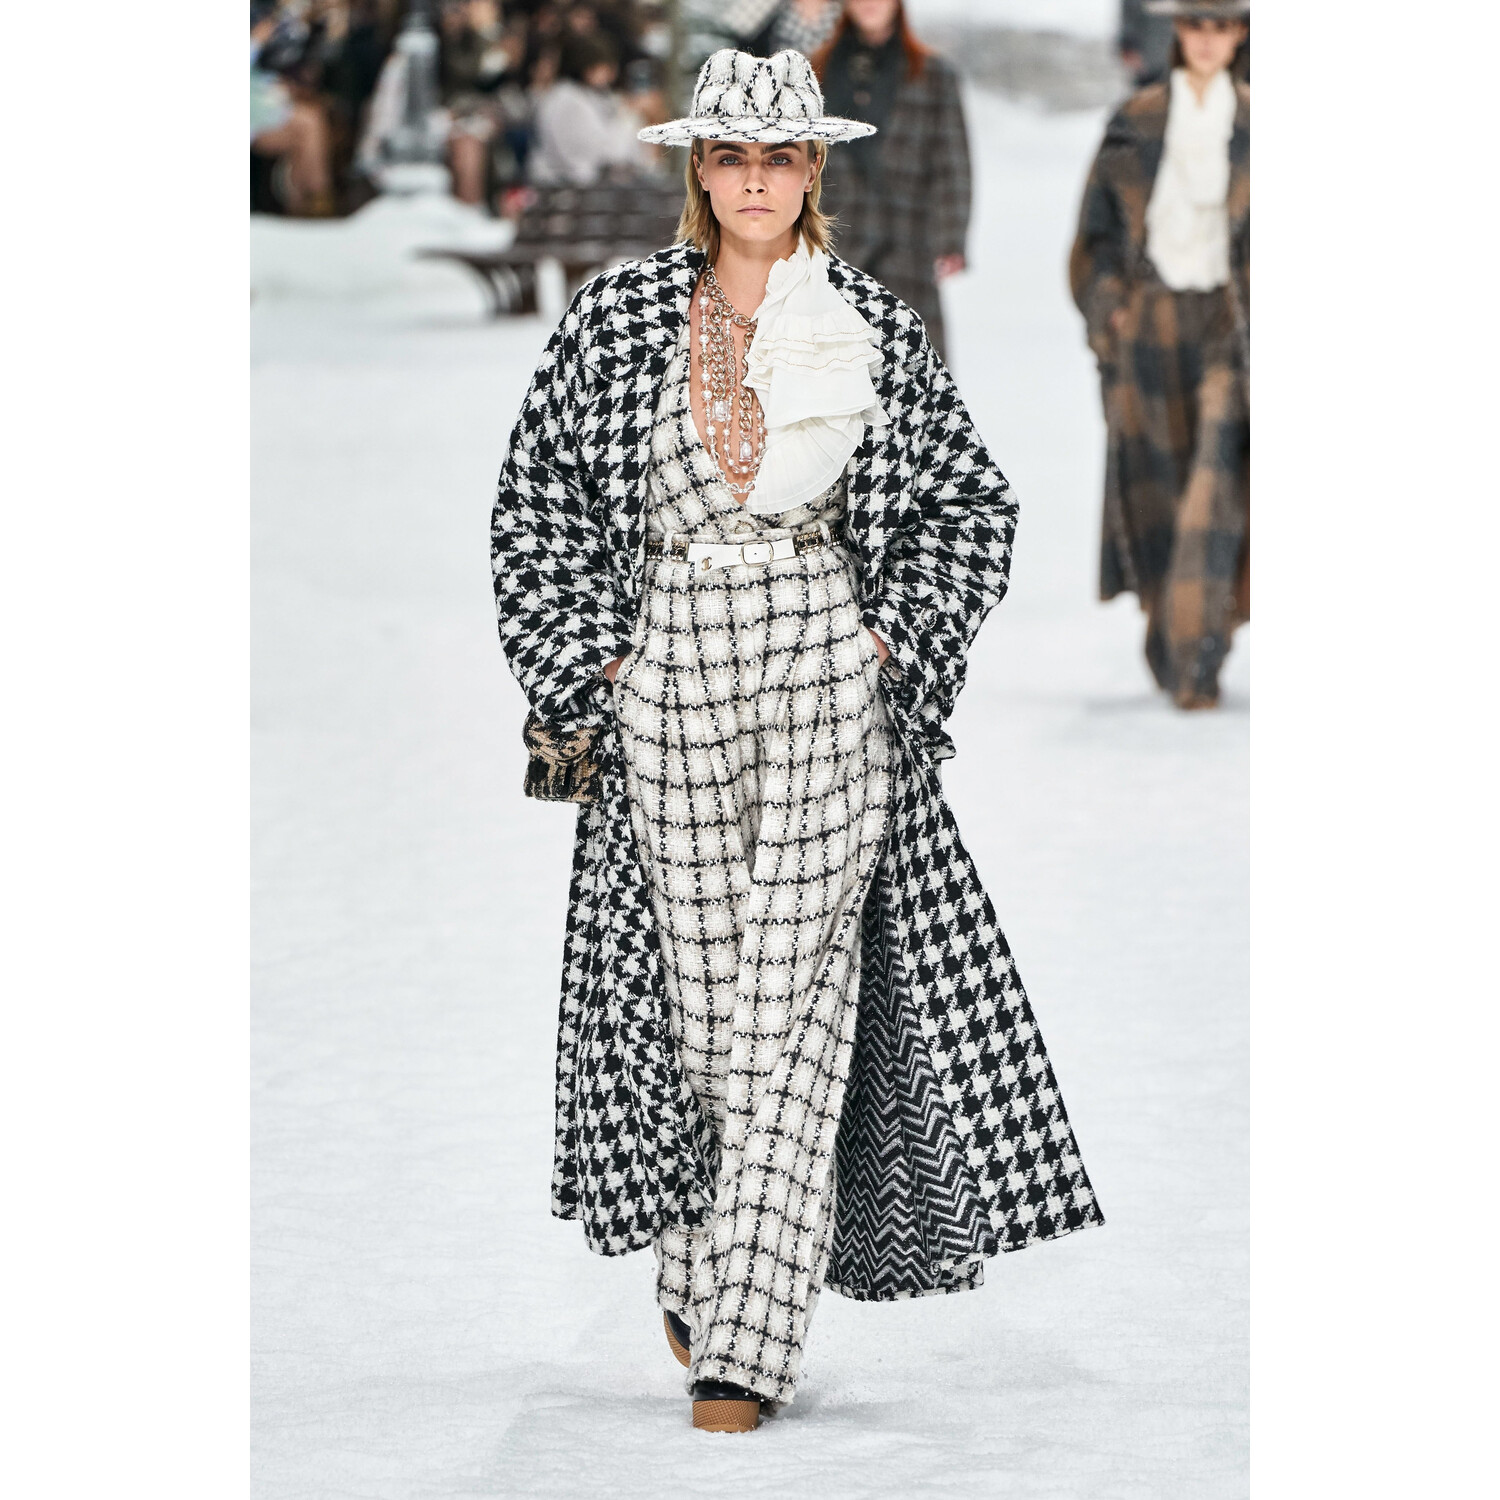 Фото Chanel Fall 2019 Ready-to-Wear / Chanel осень 2019 / Неделя моды: Париж